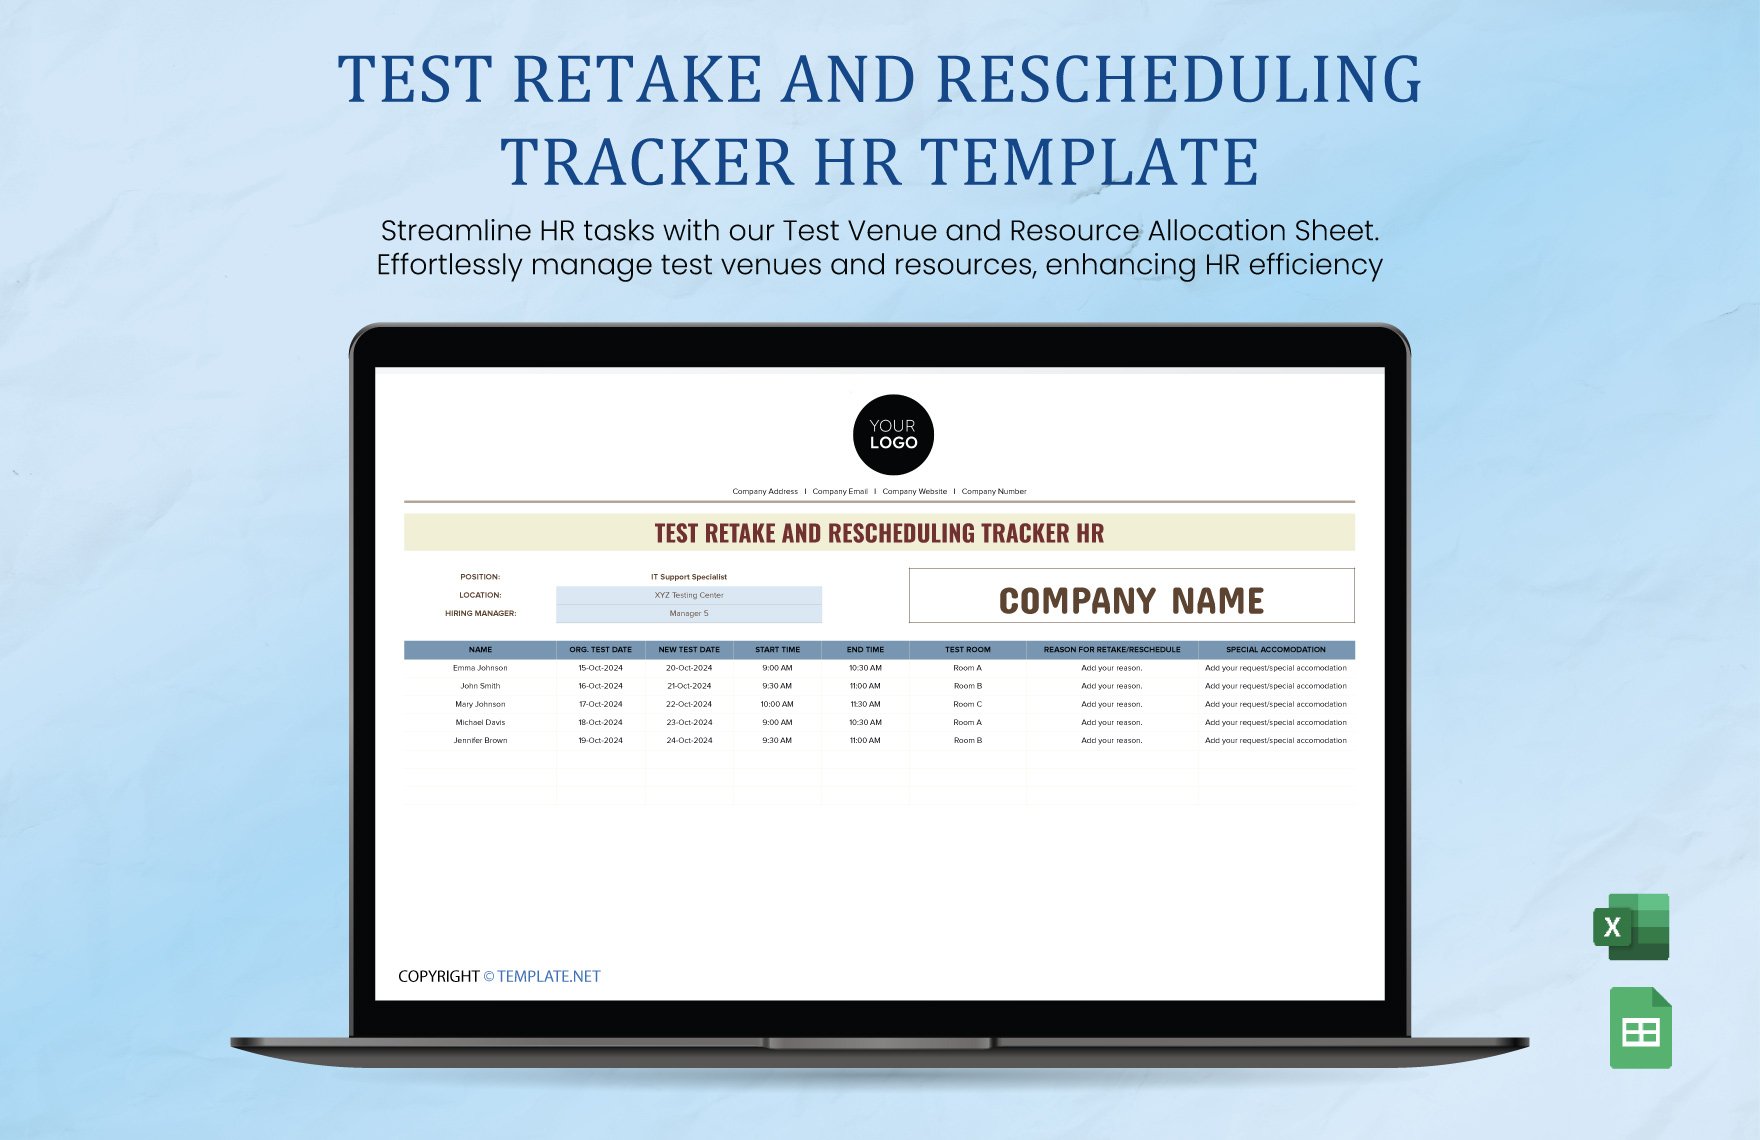 Test Retake and Rescheduling Tracker HR Template